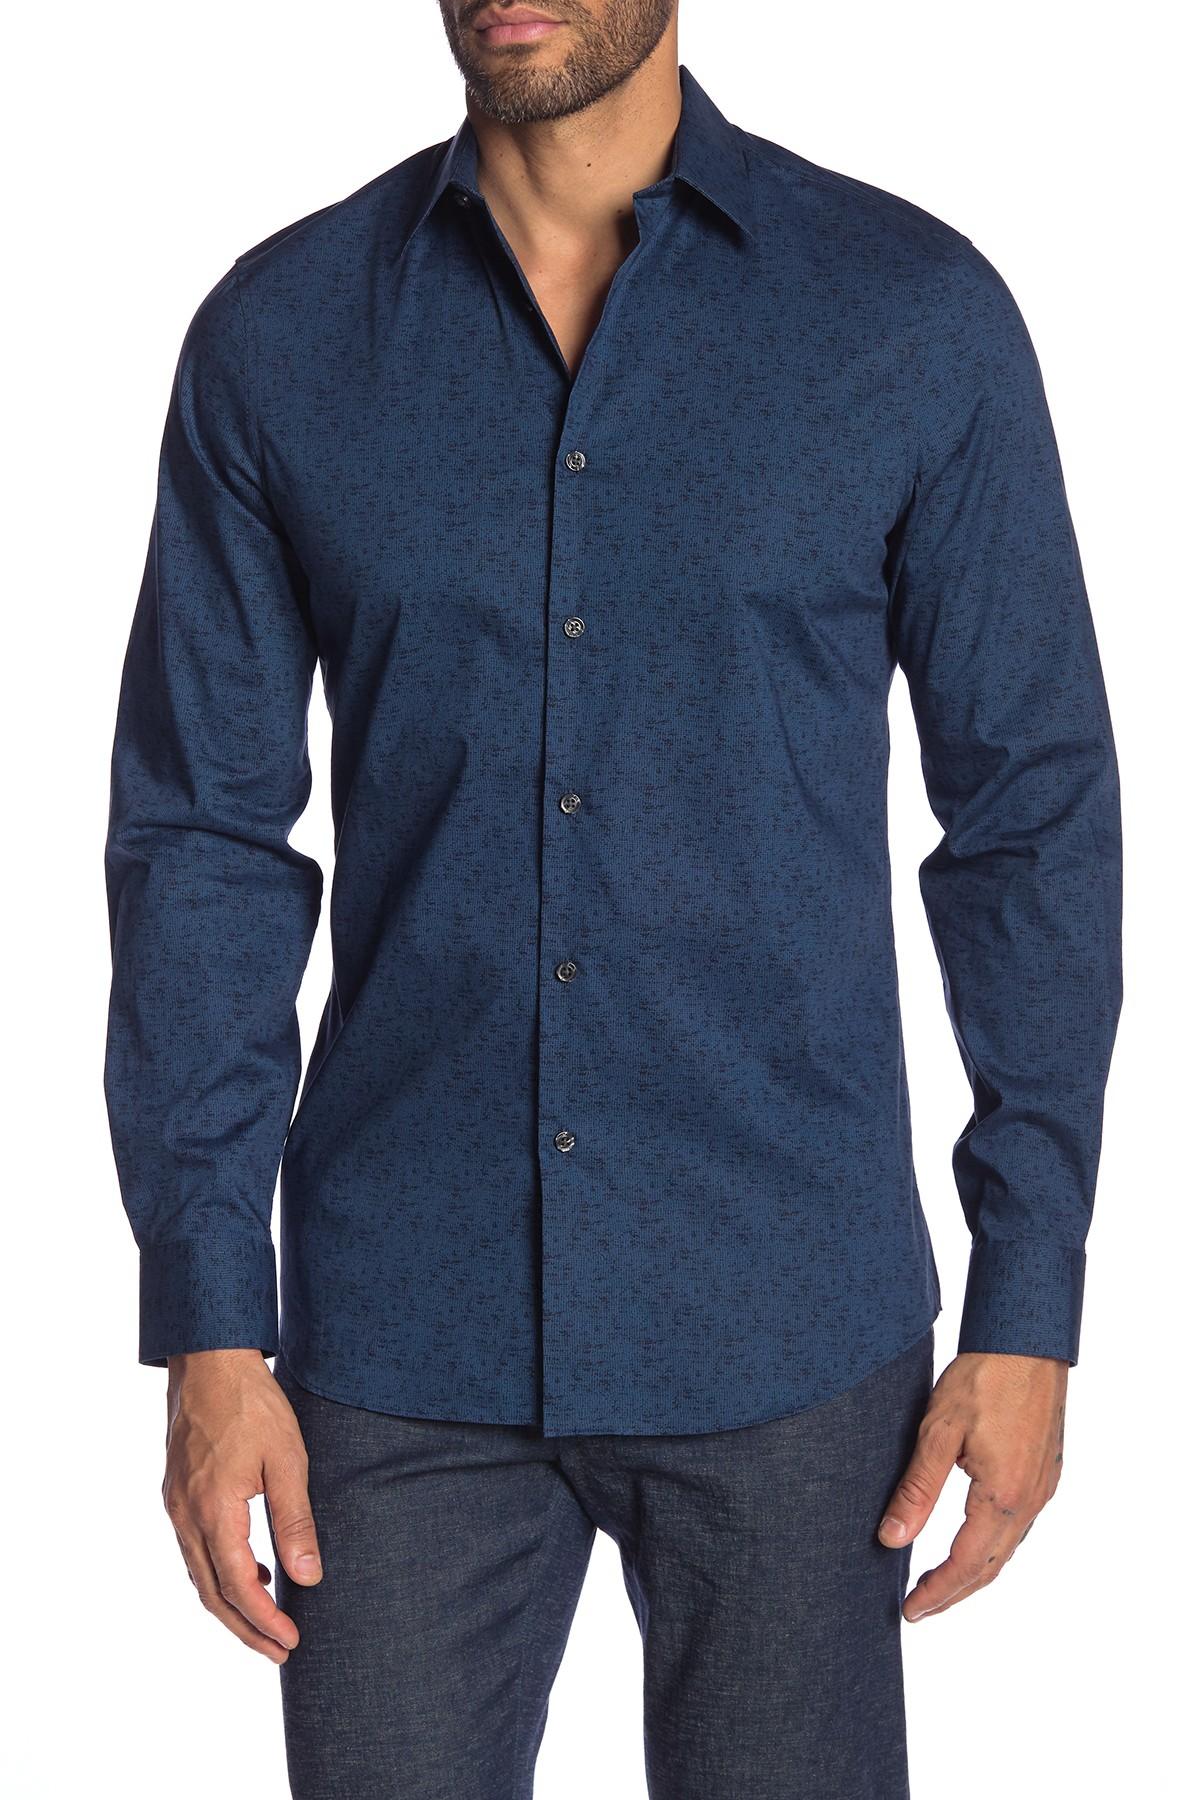 Lyst - Perry Ellis Patterned Long Sleeve Slim Fit Shirt in Blue for Men